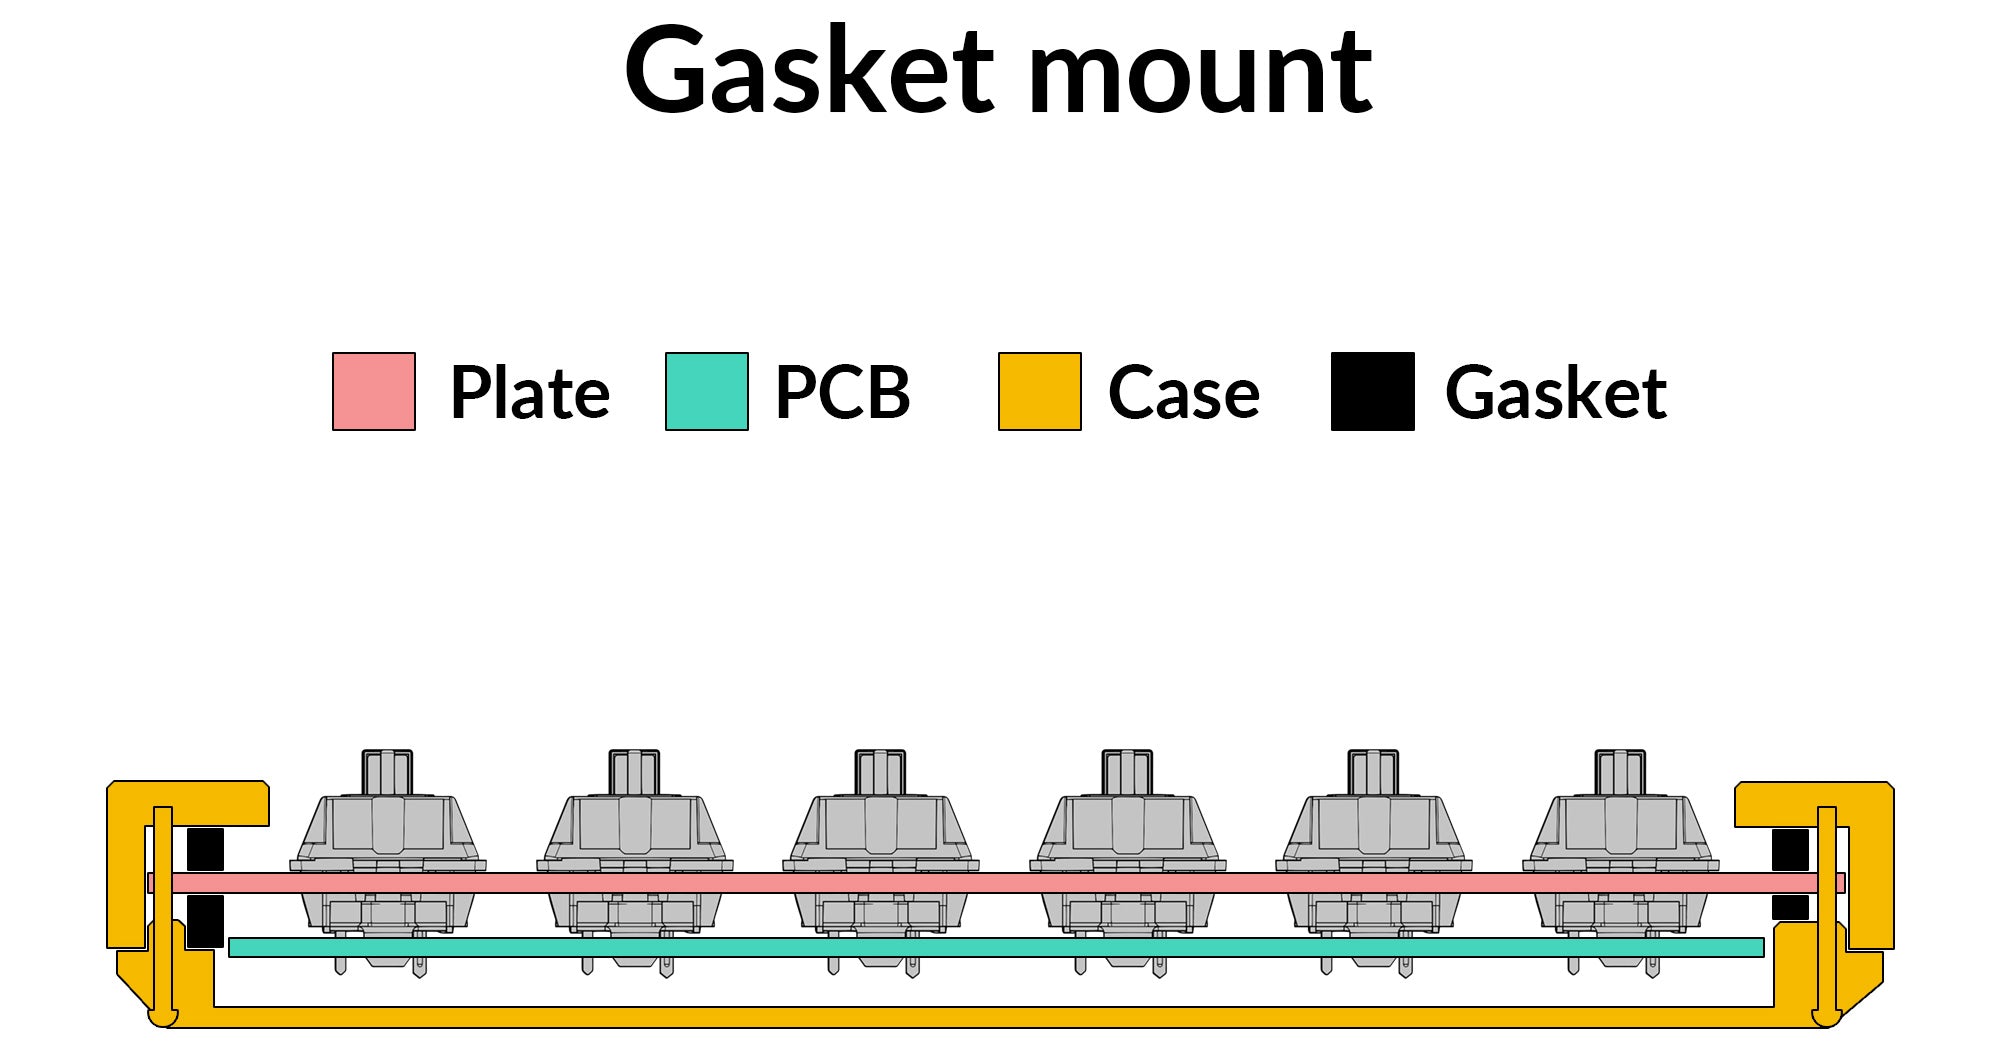 Gasket mount